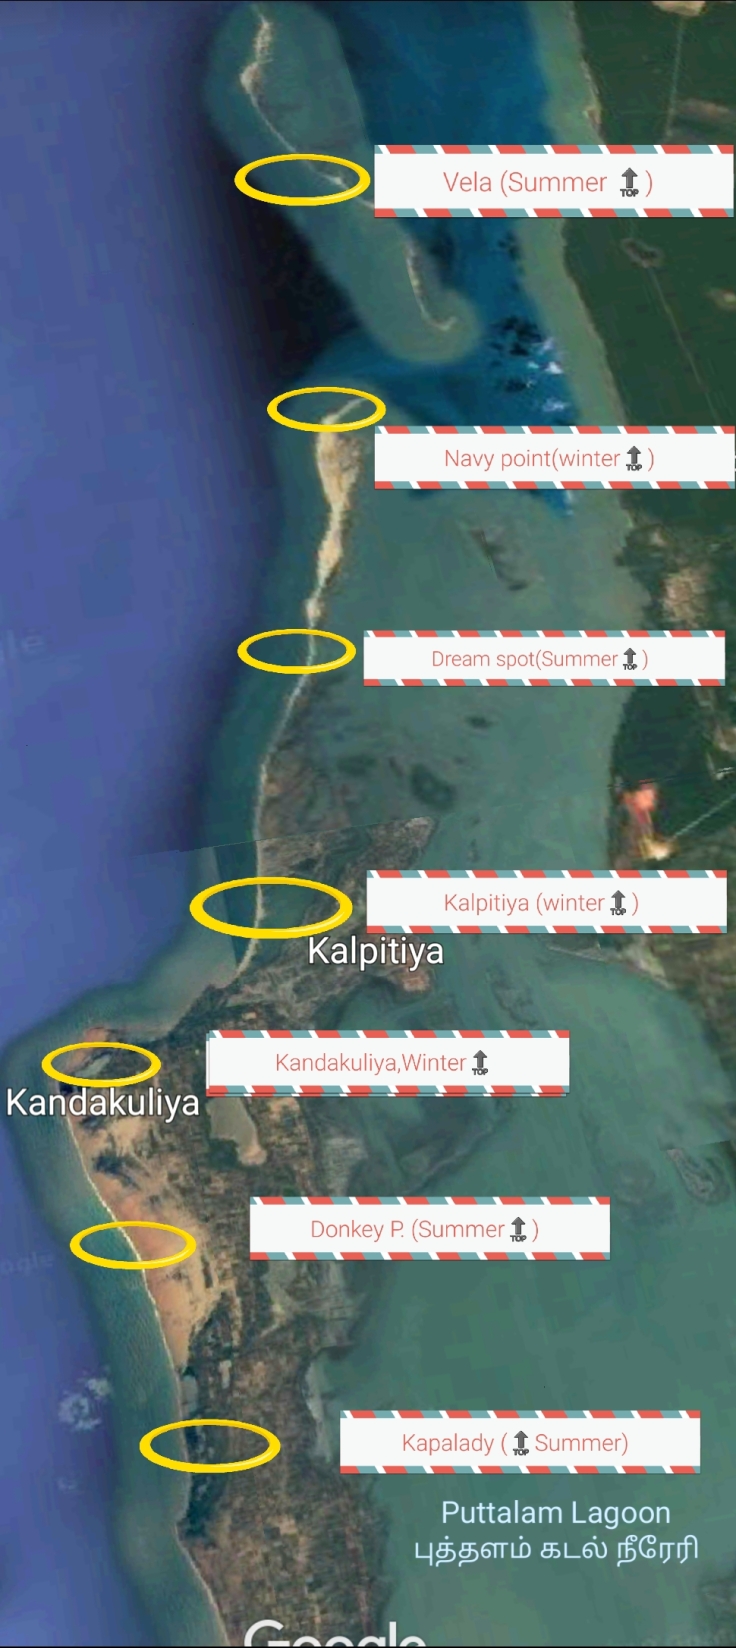 Kitesurfing spots around Kalpitiya and Kapalady